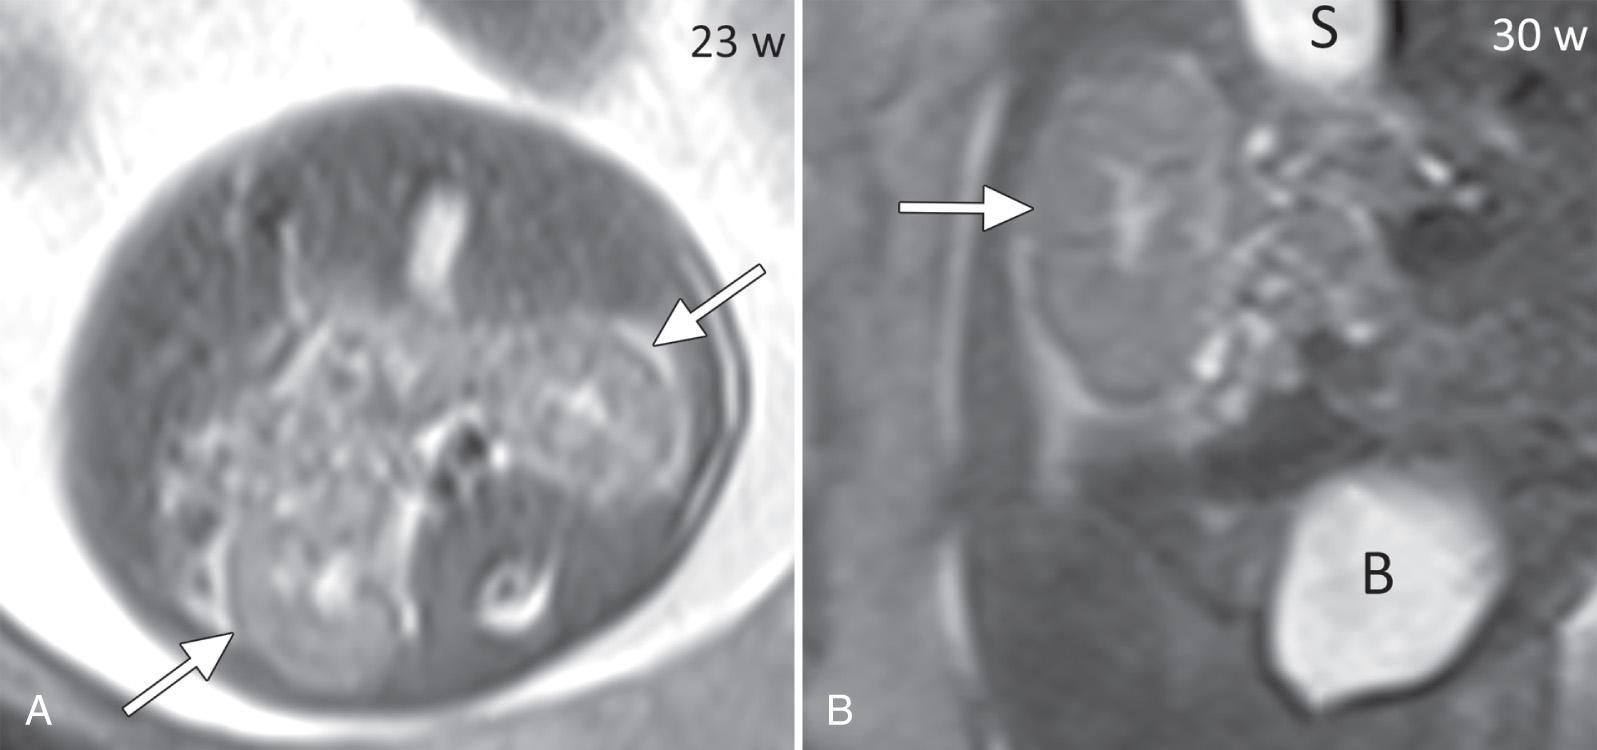 FIG. 39.4, Magnetic Resonance Images of Normal Kidneys.